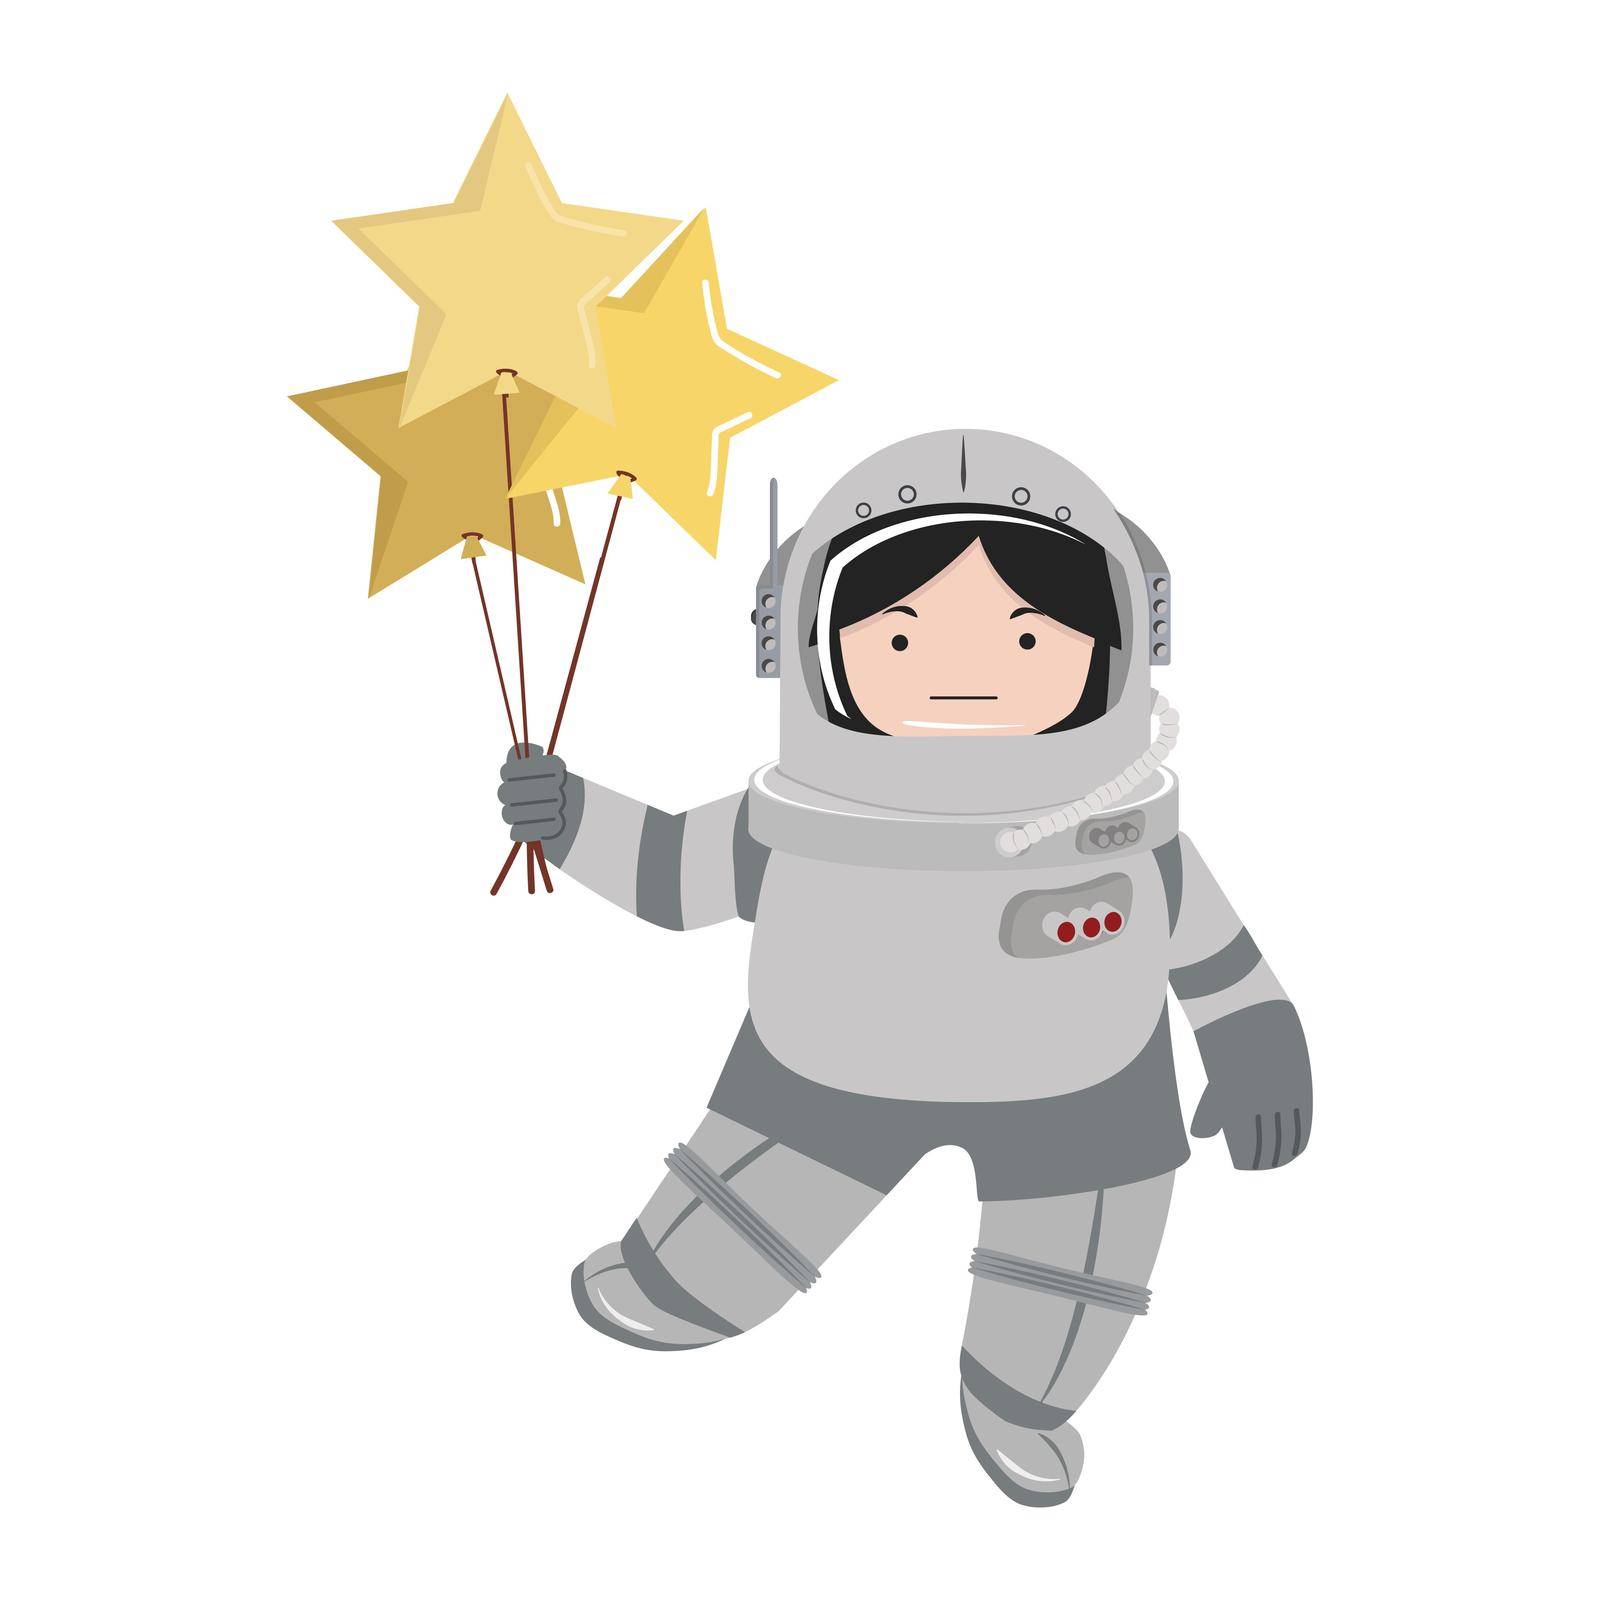 Small girl Astronaut holds a balloon cartoon